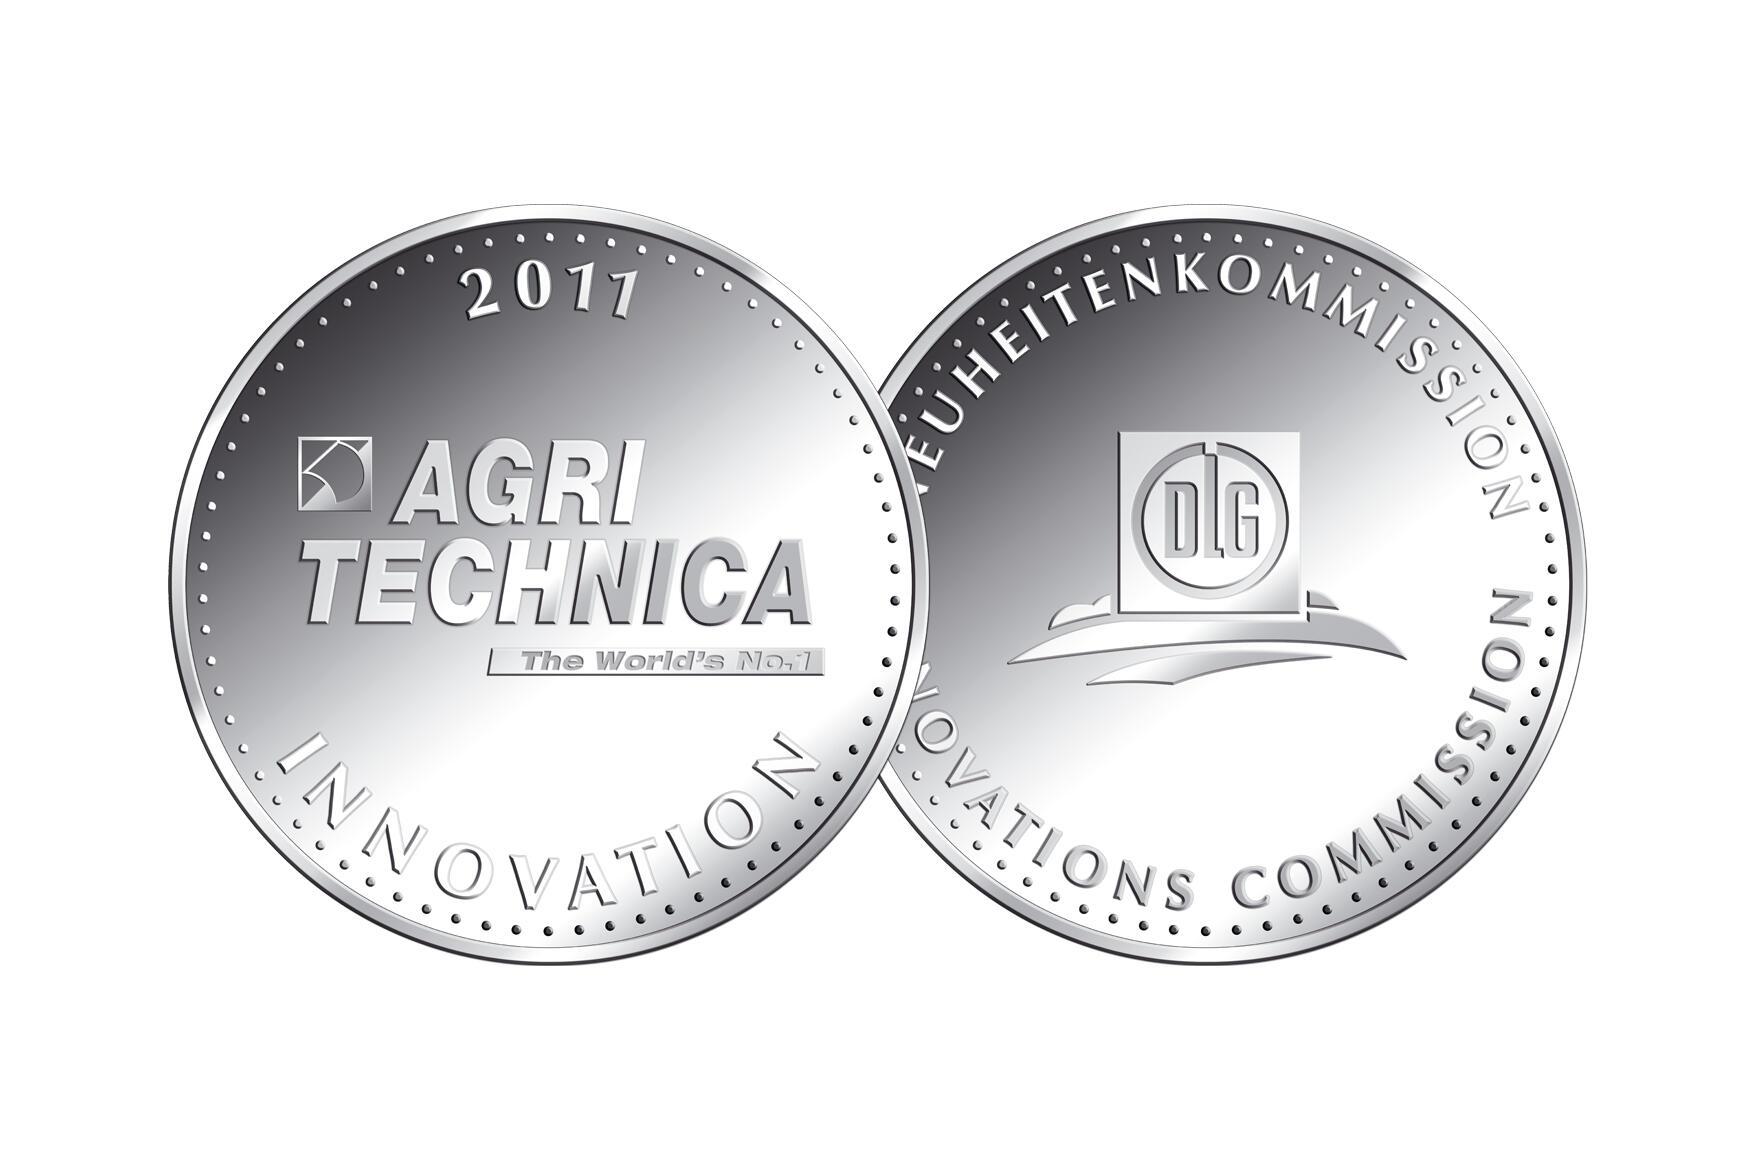 Logo Innovationspreis vls (Vertical Lift System) Messe Agritechnica